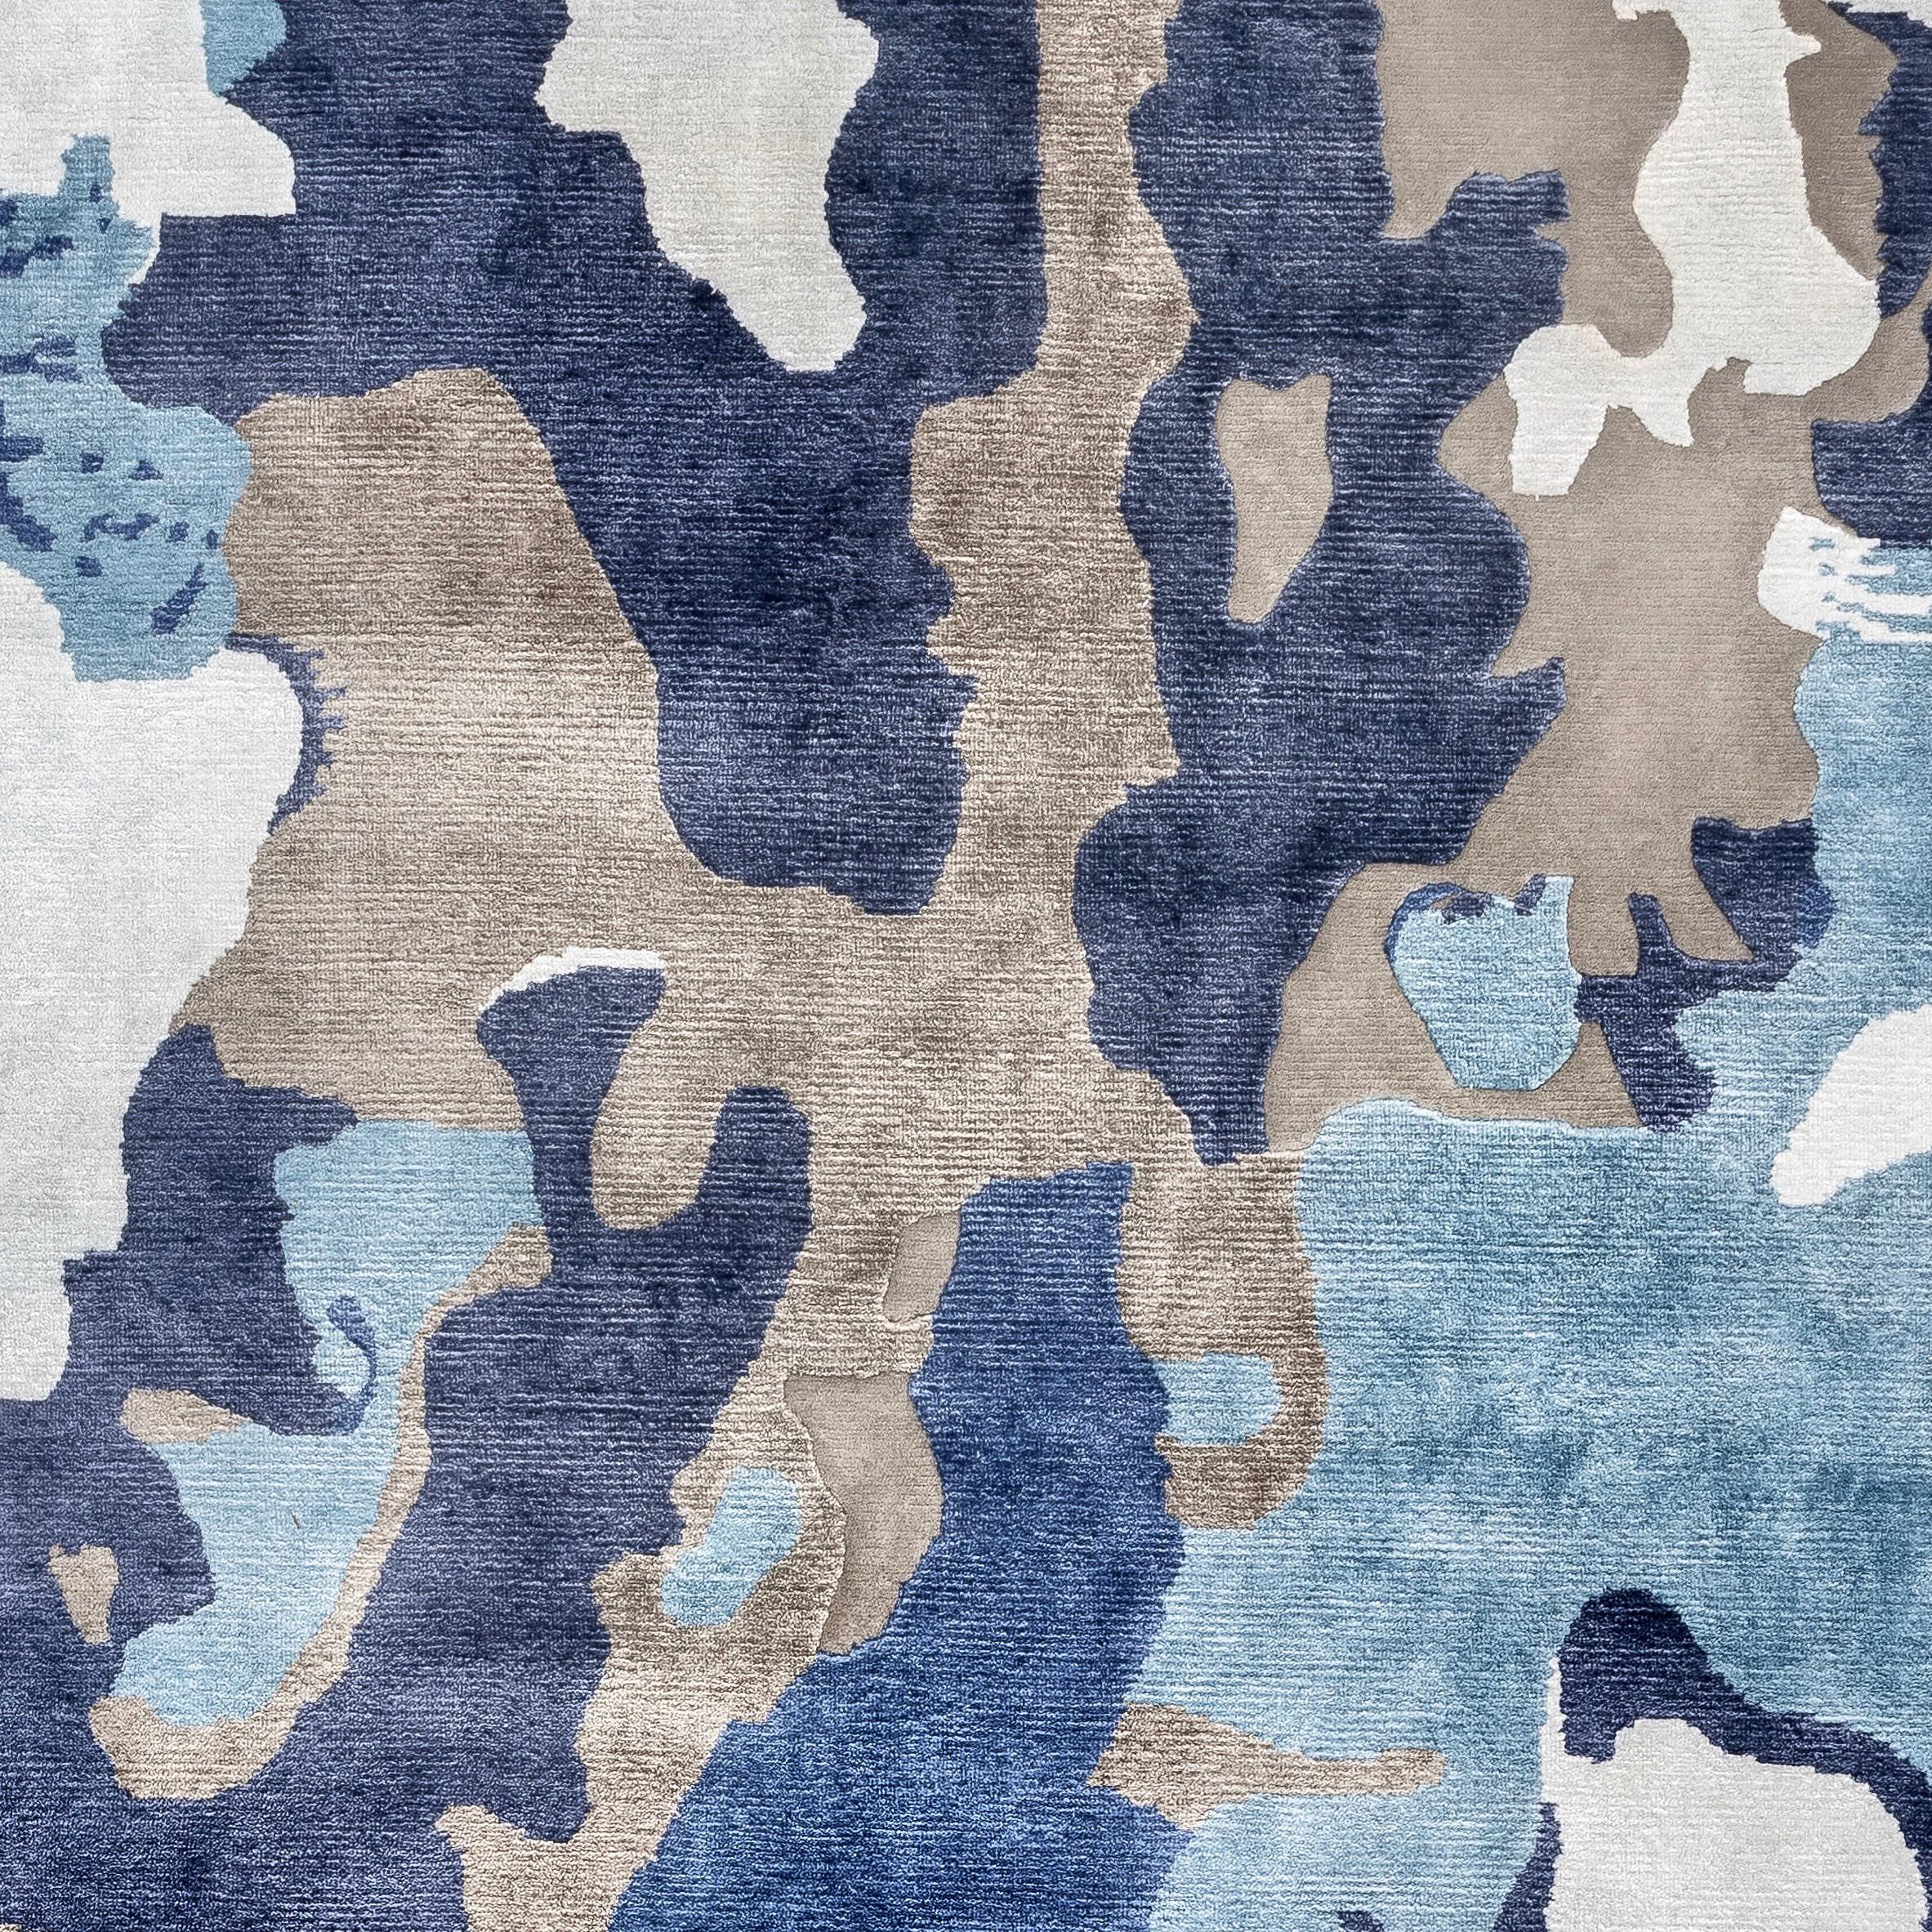 Nepalese 21st Century Carpet Rug Kommando in Himalayan Wool and Silk Blue, Gray, White